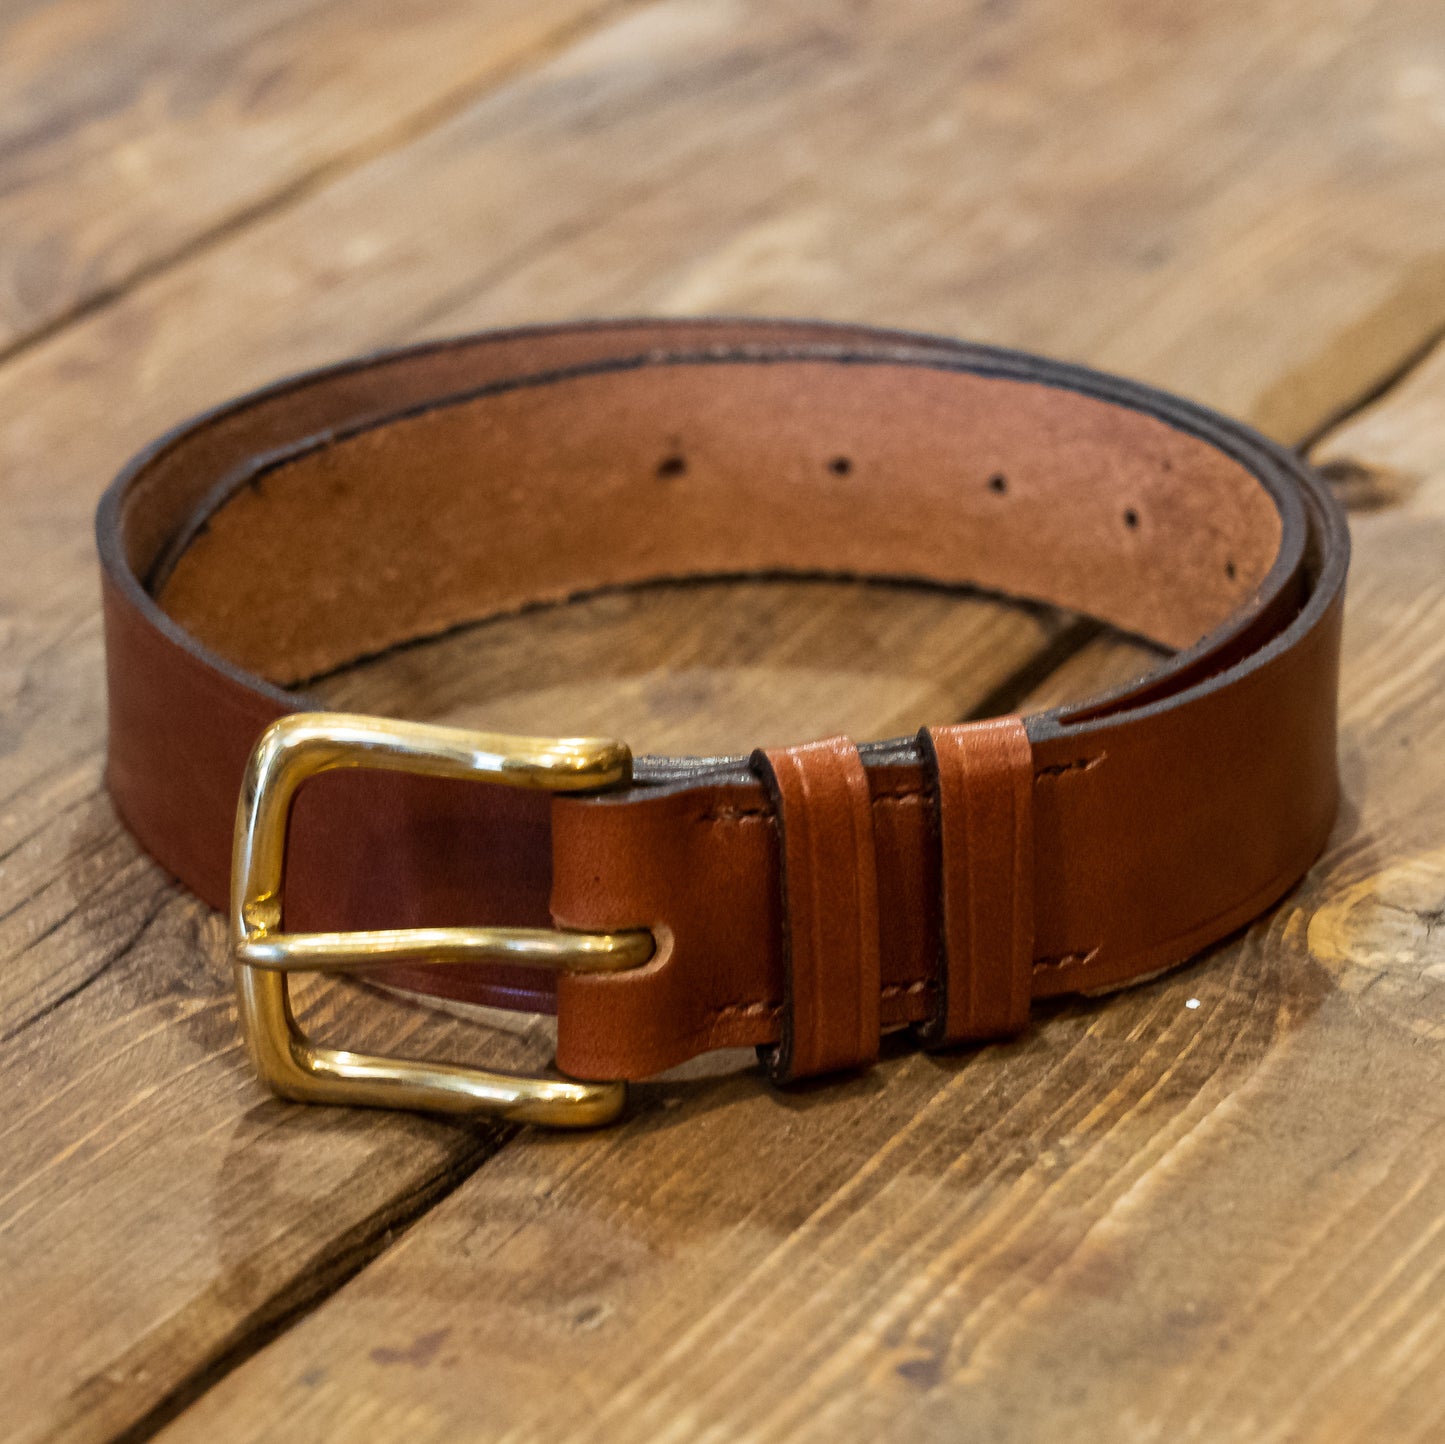 sedgewick saddlery leather tan belt brass buckle english made